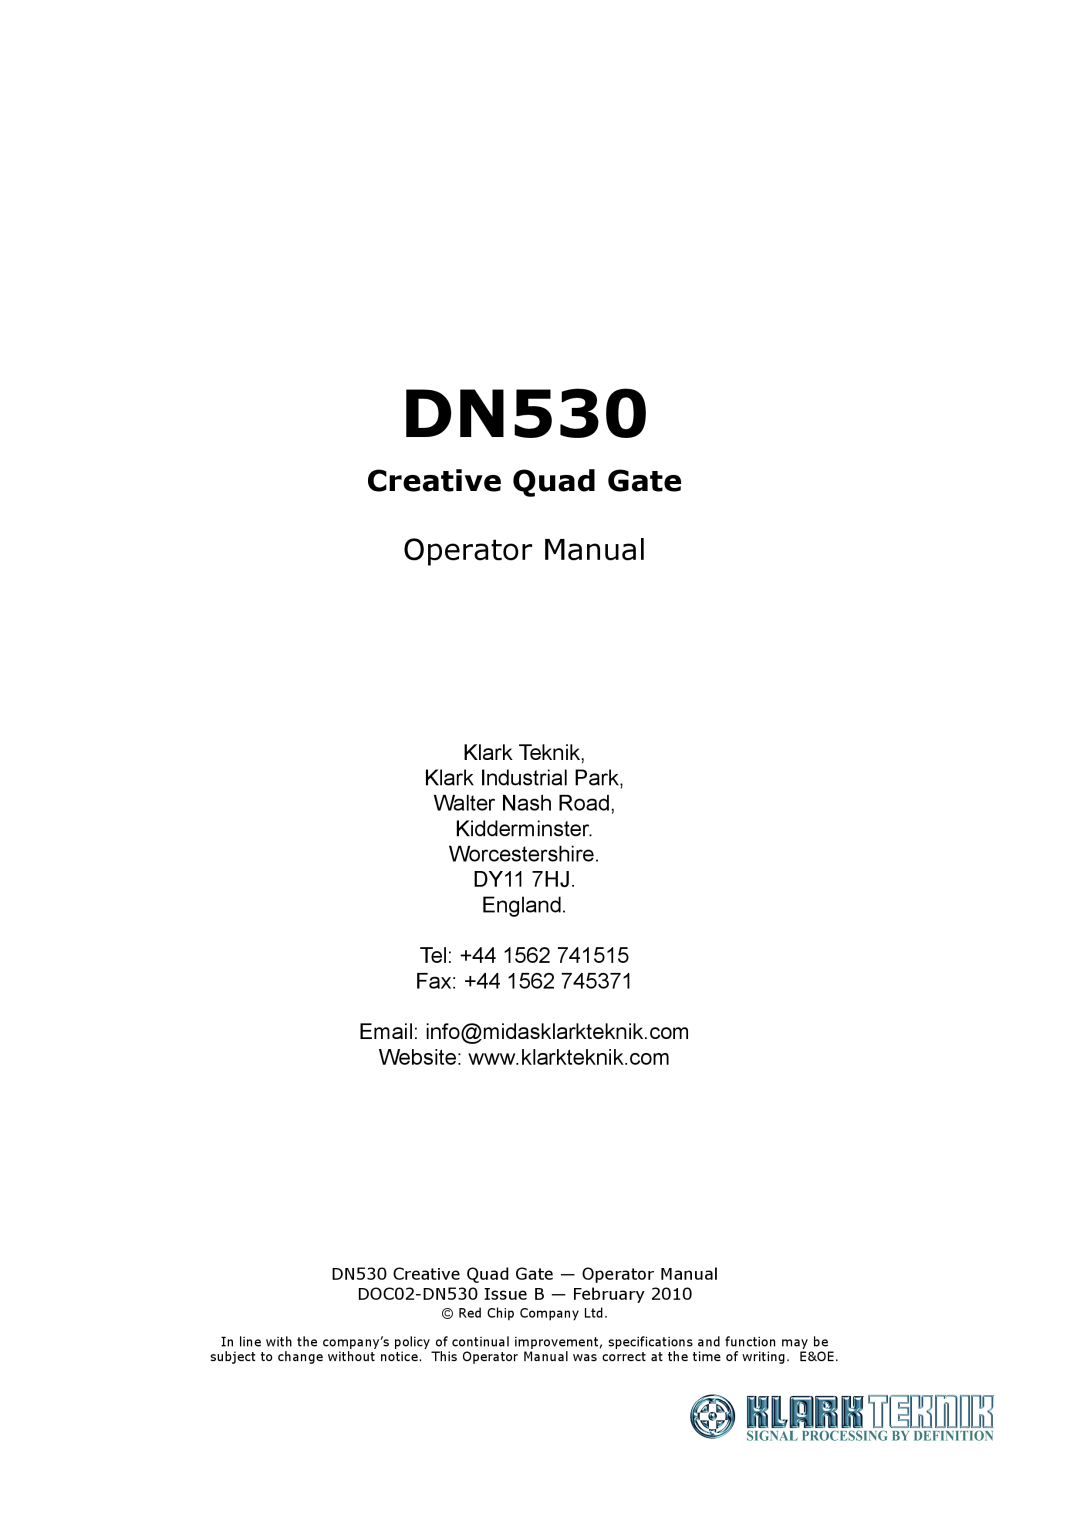 Klark Teknik DN530 specifications Creative Quad Gate, Operator Manual, Klark Teknik Klark Industrial Park 